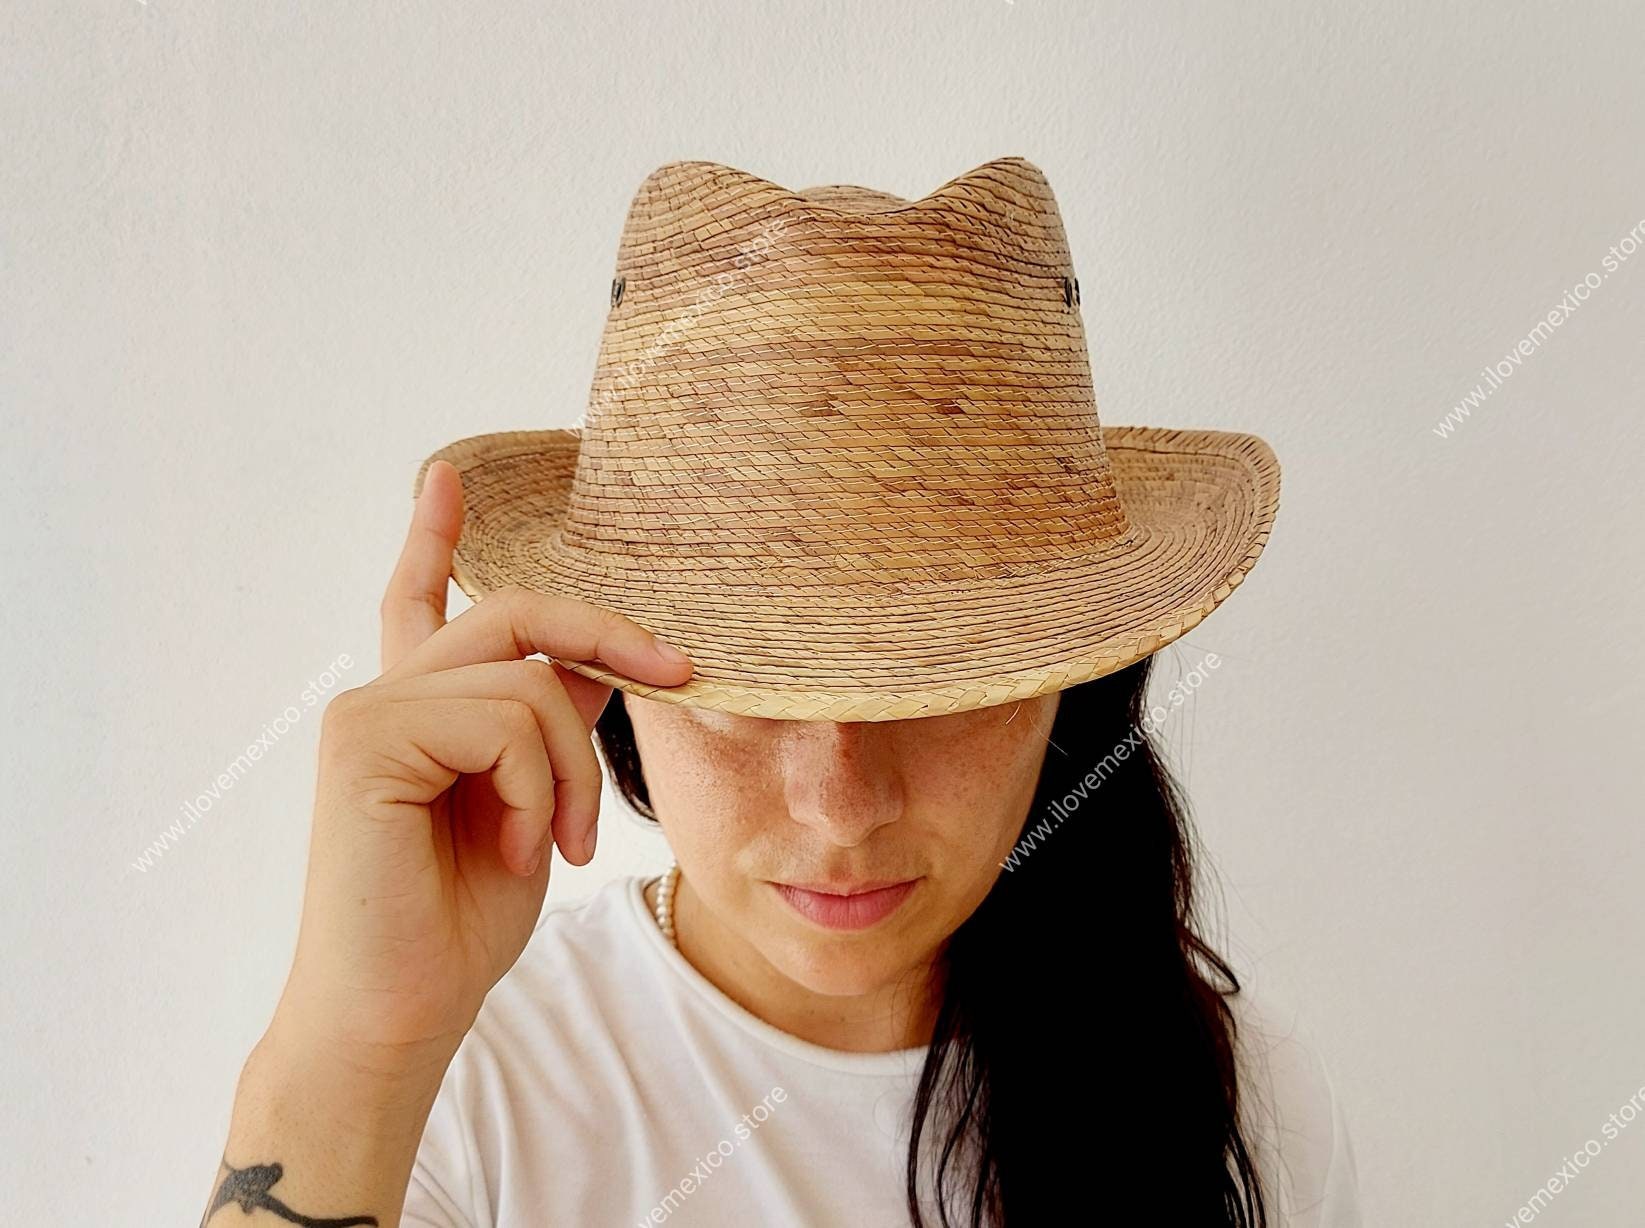 Palm Hat, Big Brim Hat, Flat Brim Hat, Hats for Men, Hats for Women, Fashion Hat, Summer Hat, Beach Hat